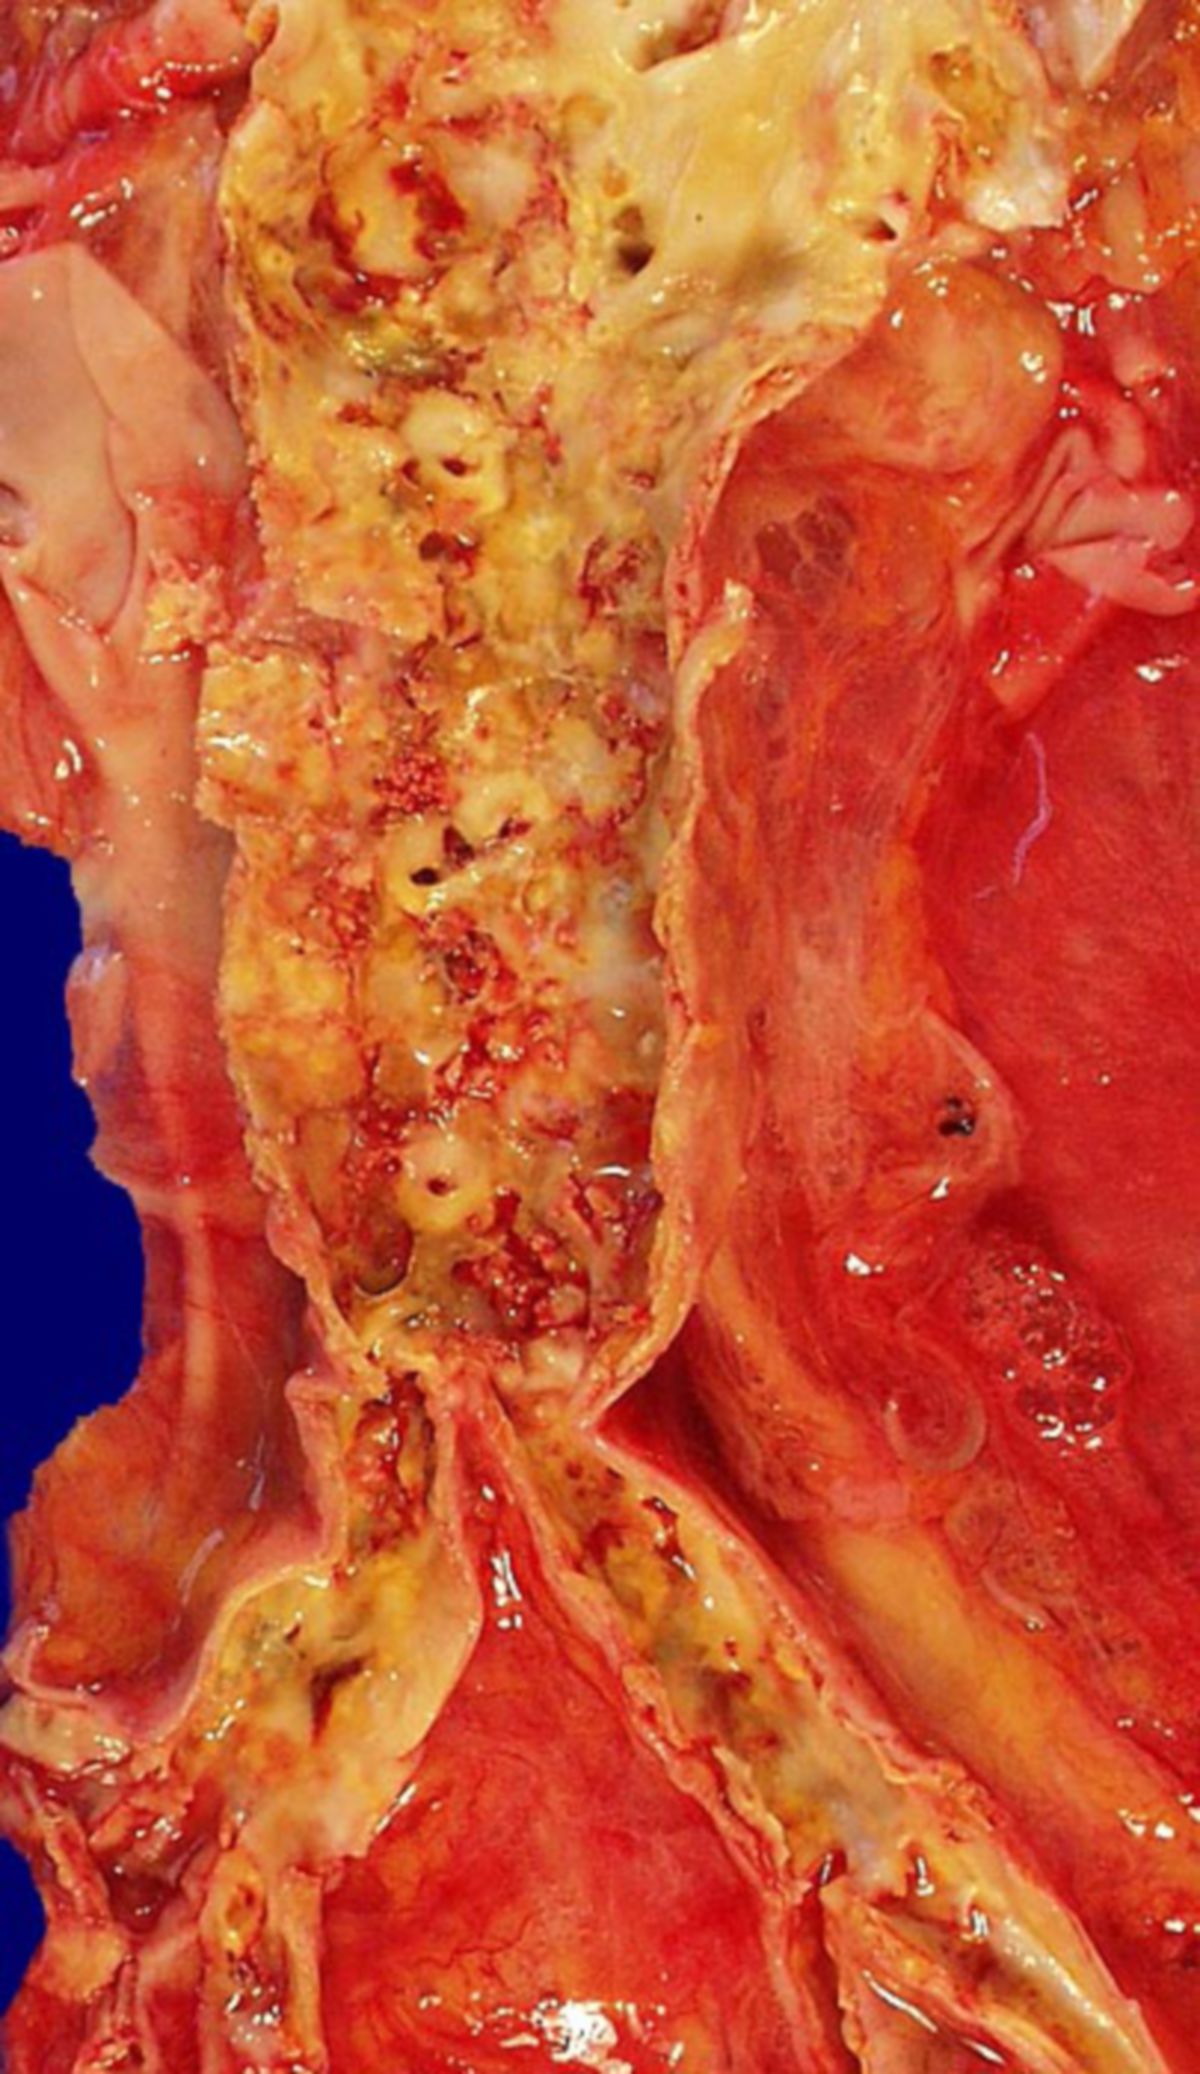 Aorta abdominalis (Mittelschwere Atherosklerose)